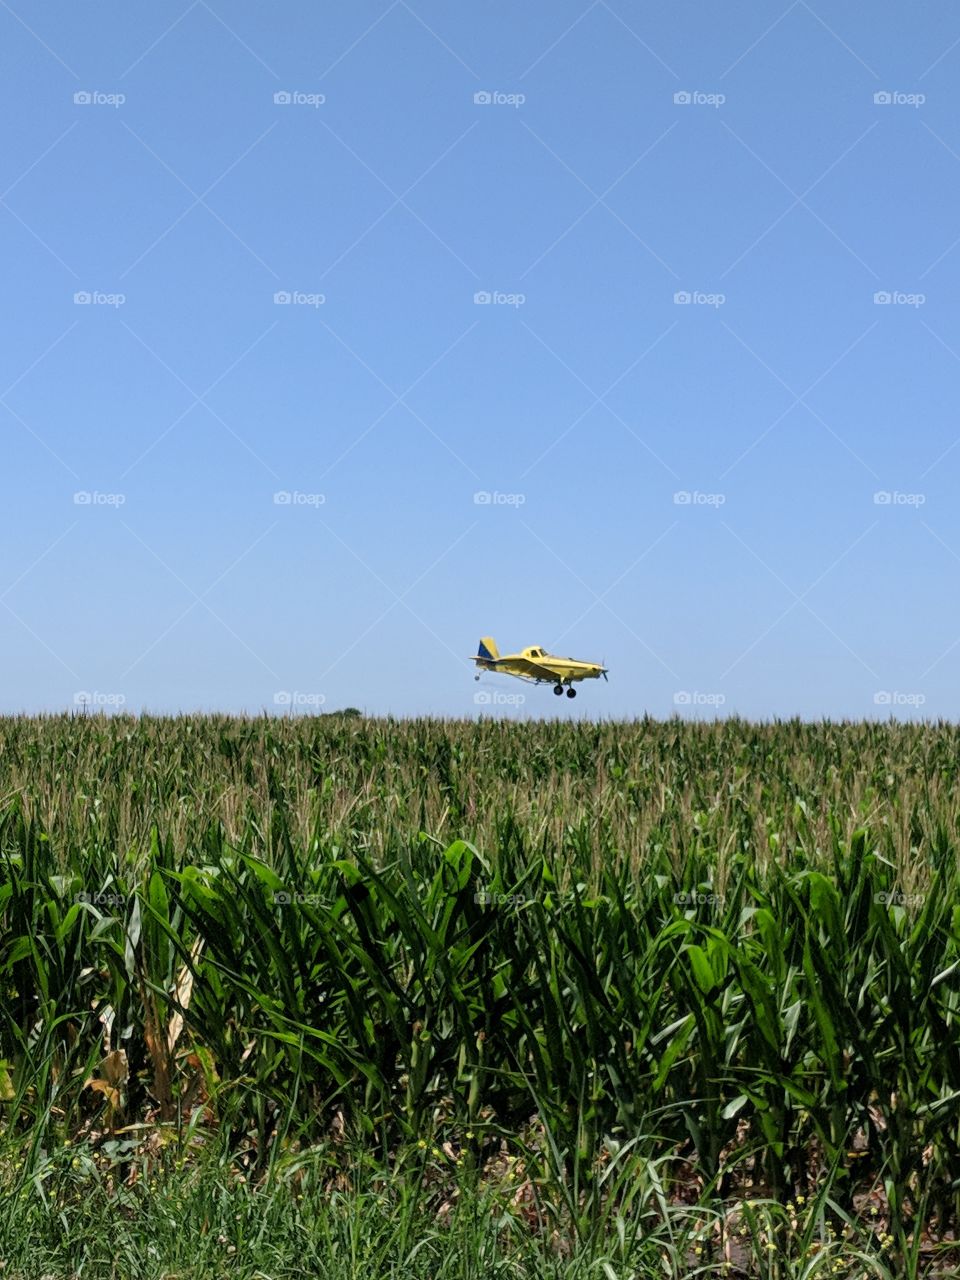 crop dusting the corn field